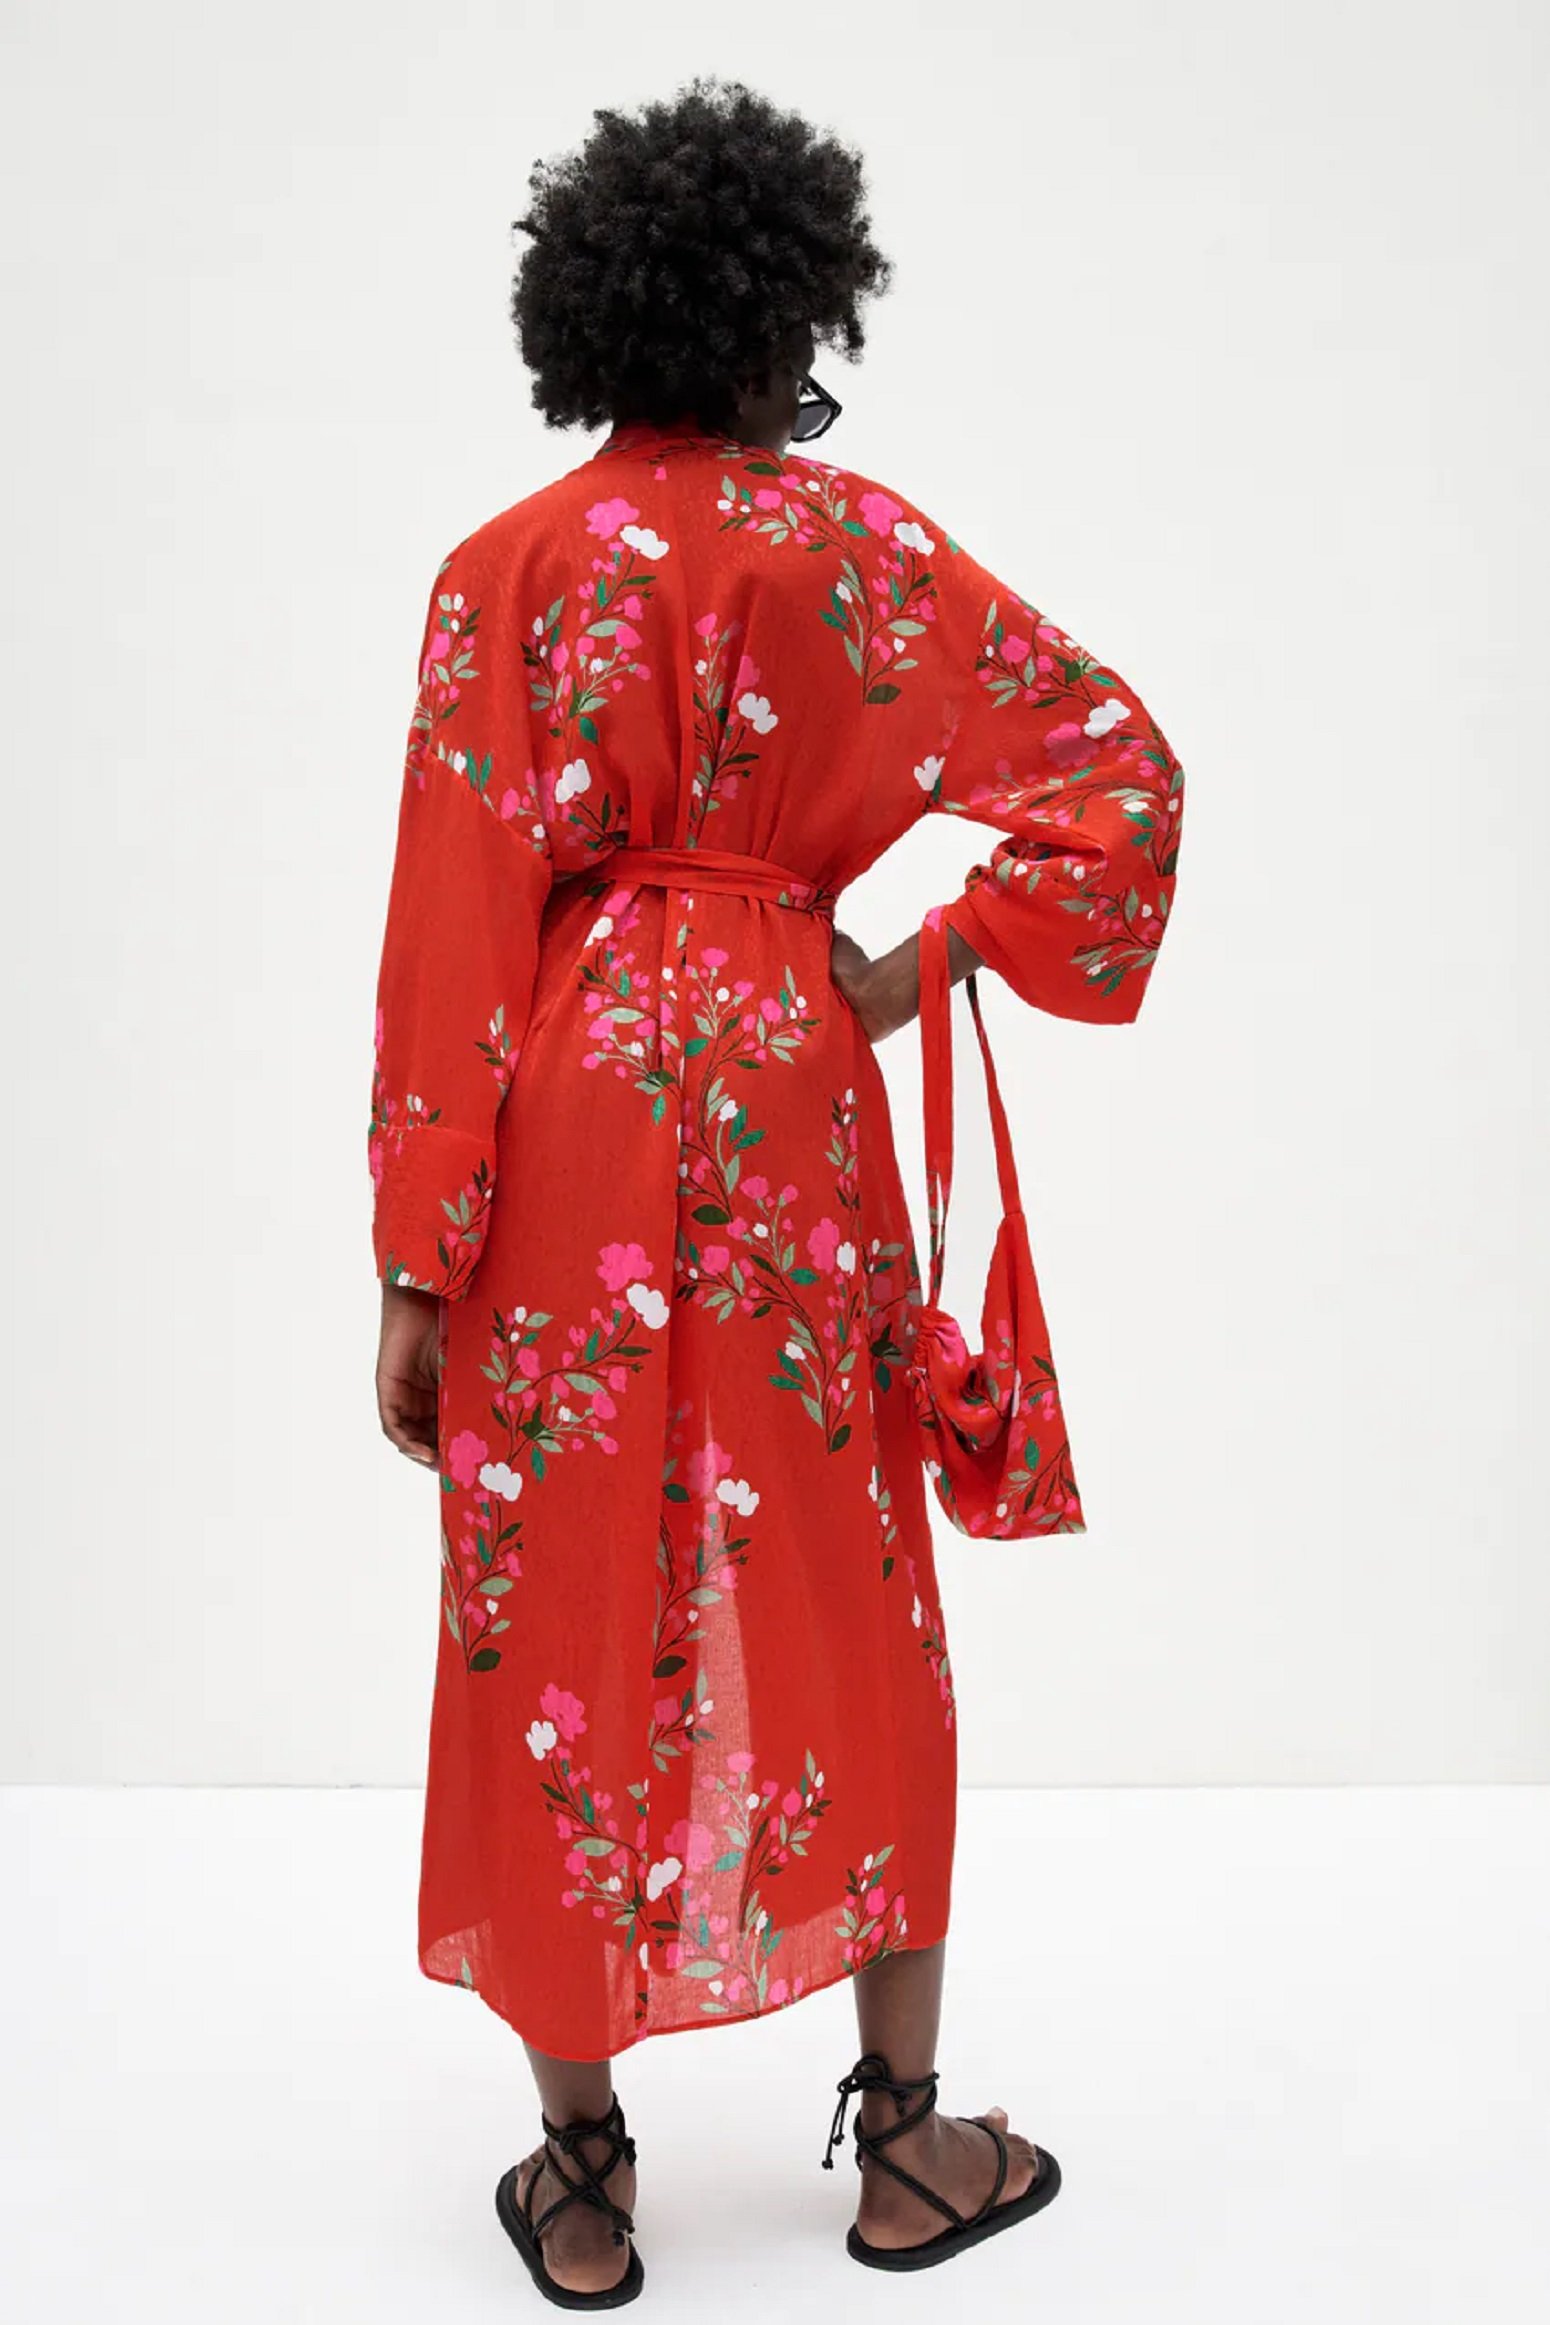 Vestit quimono llarg vermell|roig / Zara